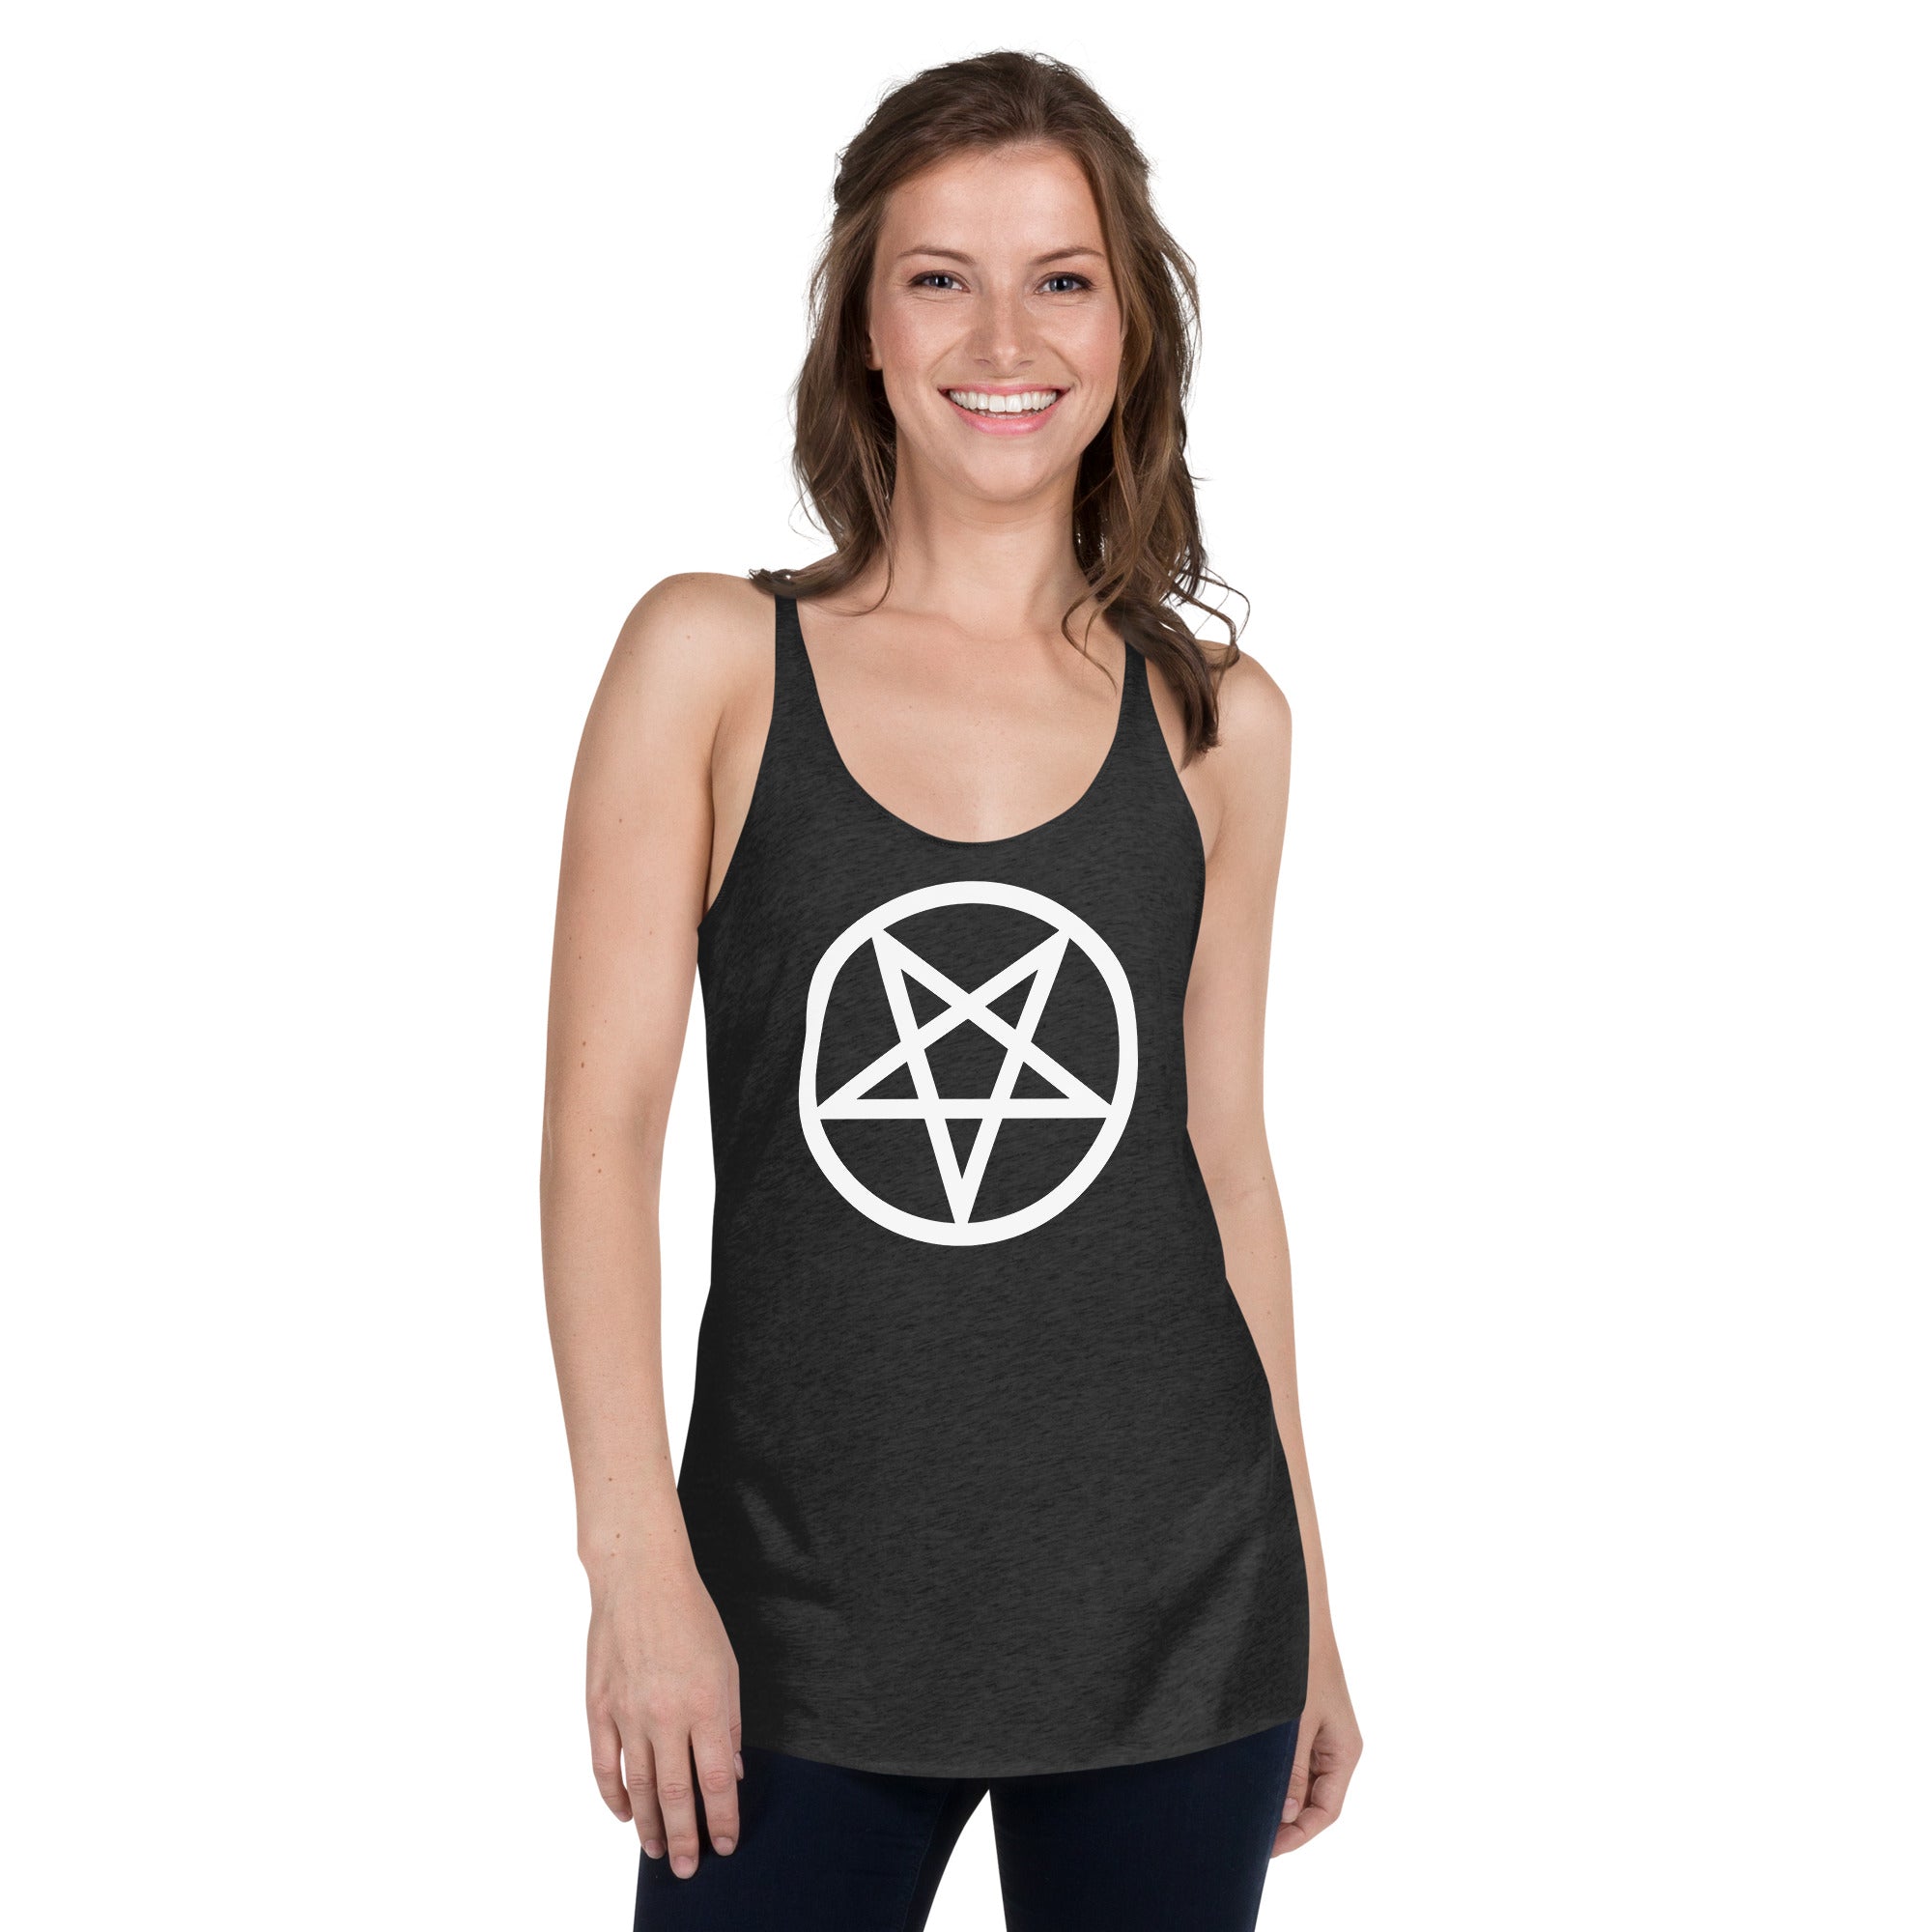 White Classic Inverted Pentagram Occult Symbol Women's Racerback Tank Top Shirt